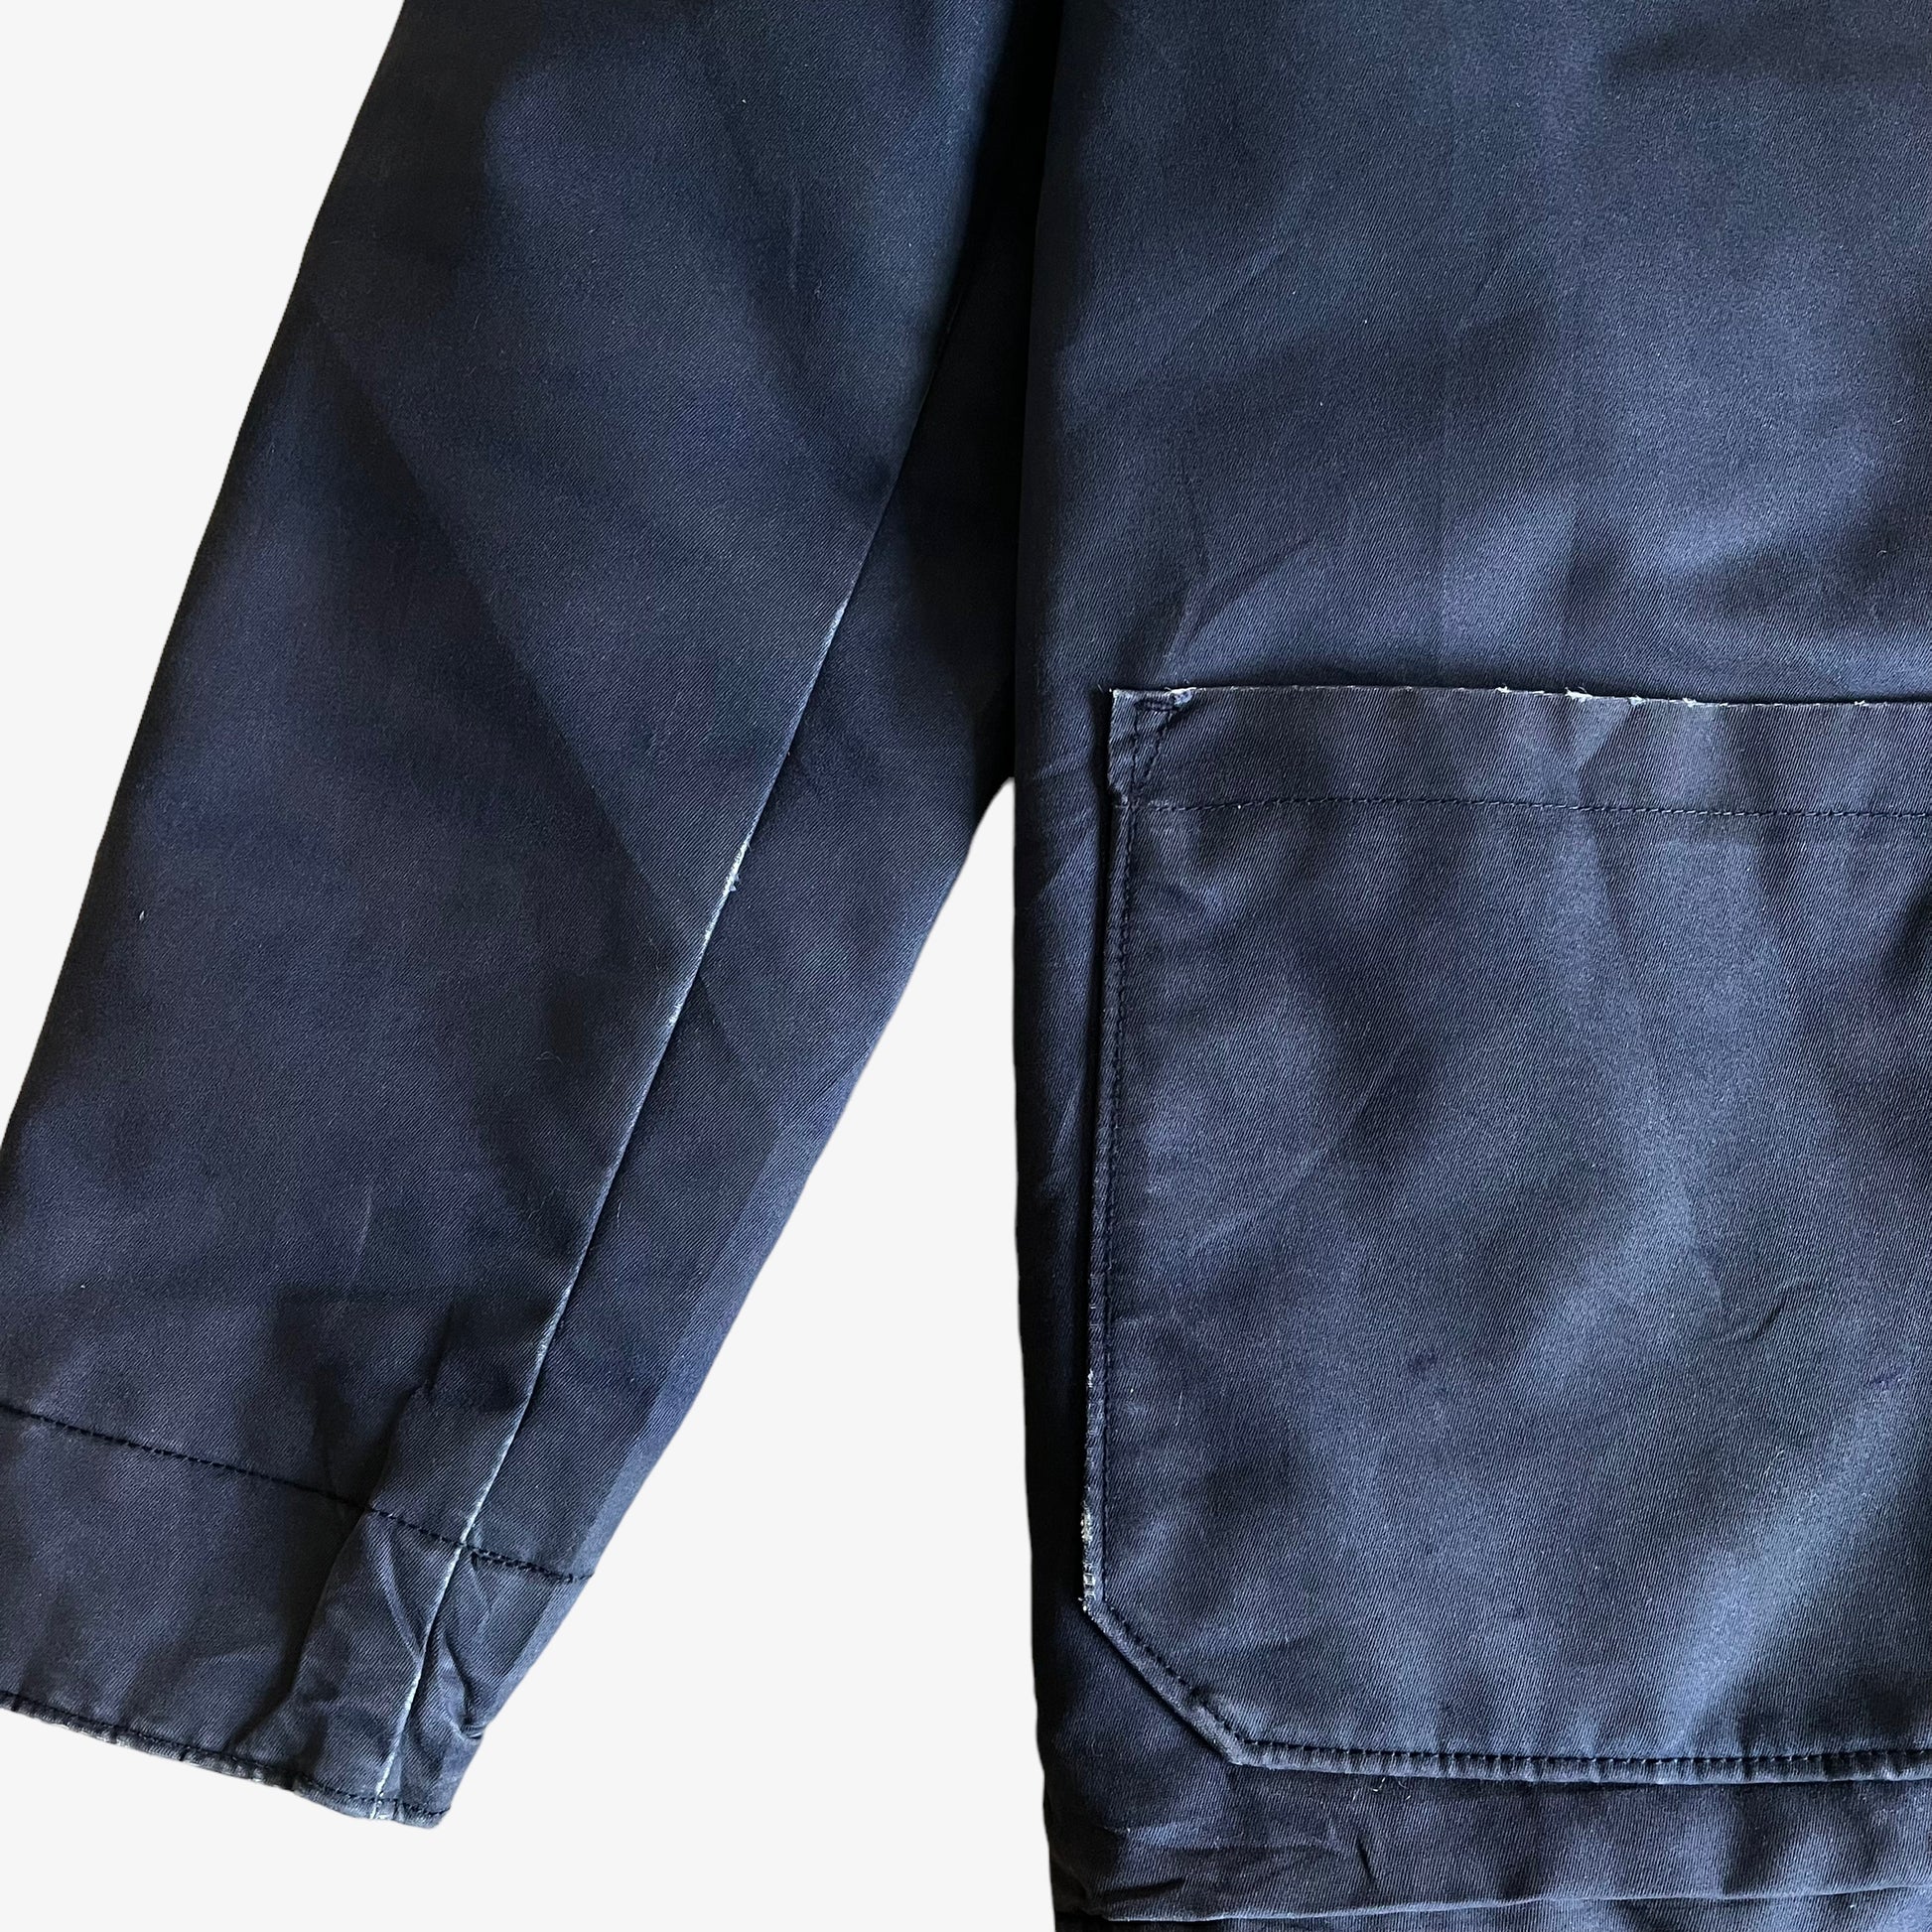 Vintage Y2K Levis Chore Workwear Jacket With Corduroy Collar Wear - Casspios Dream